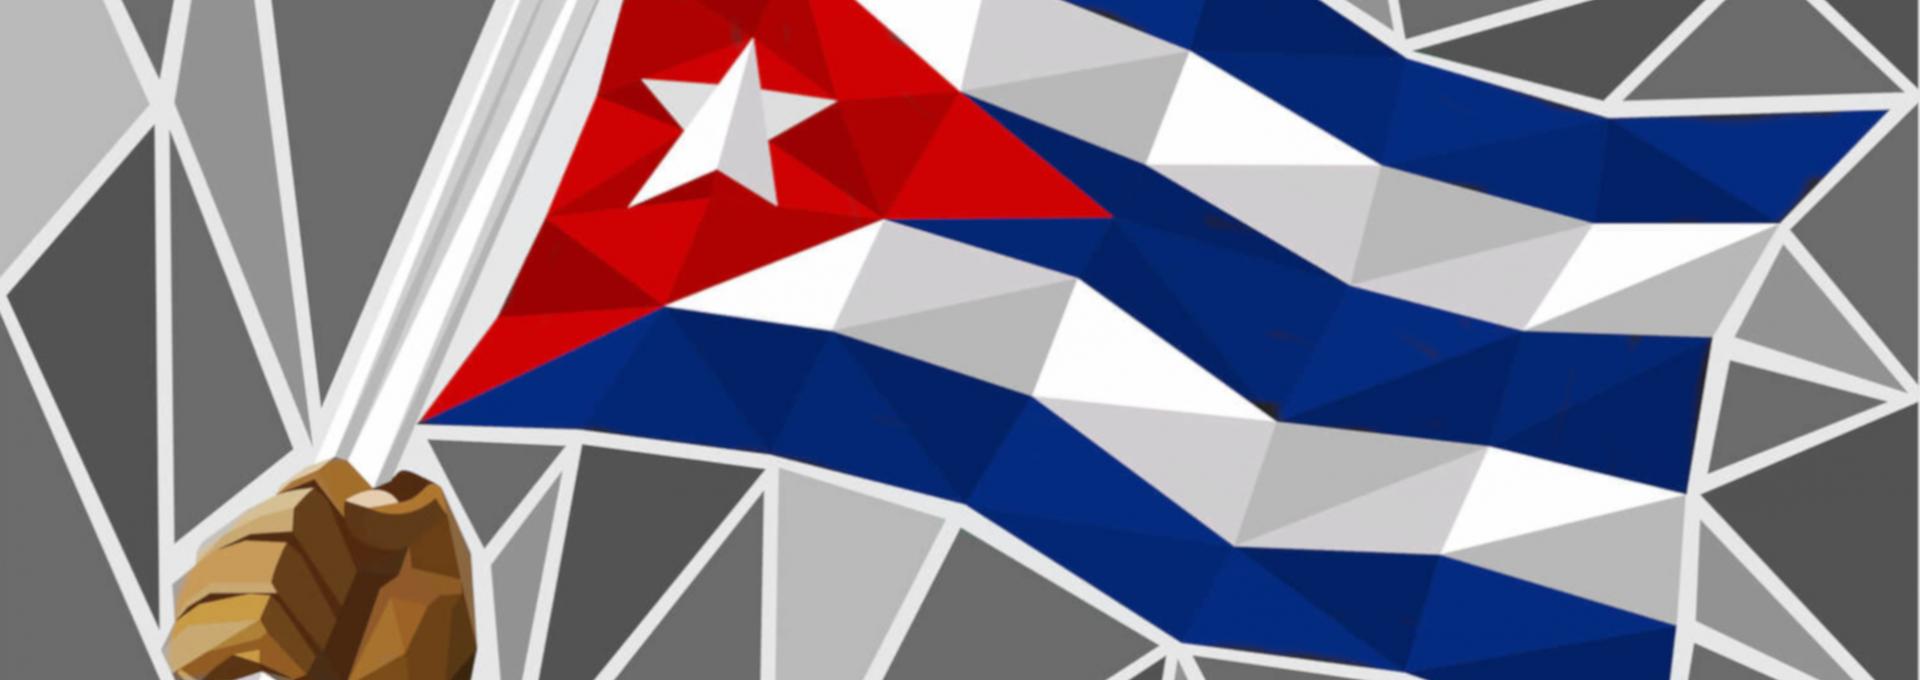 VIVA CUBA LIBRE